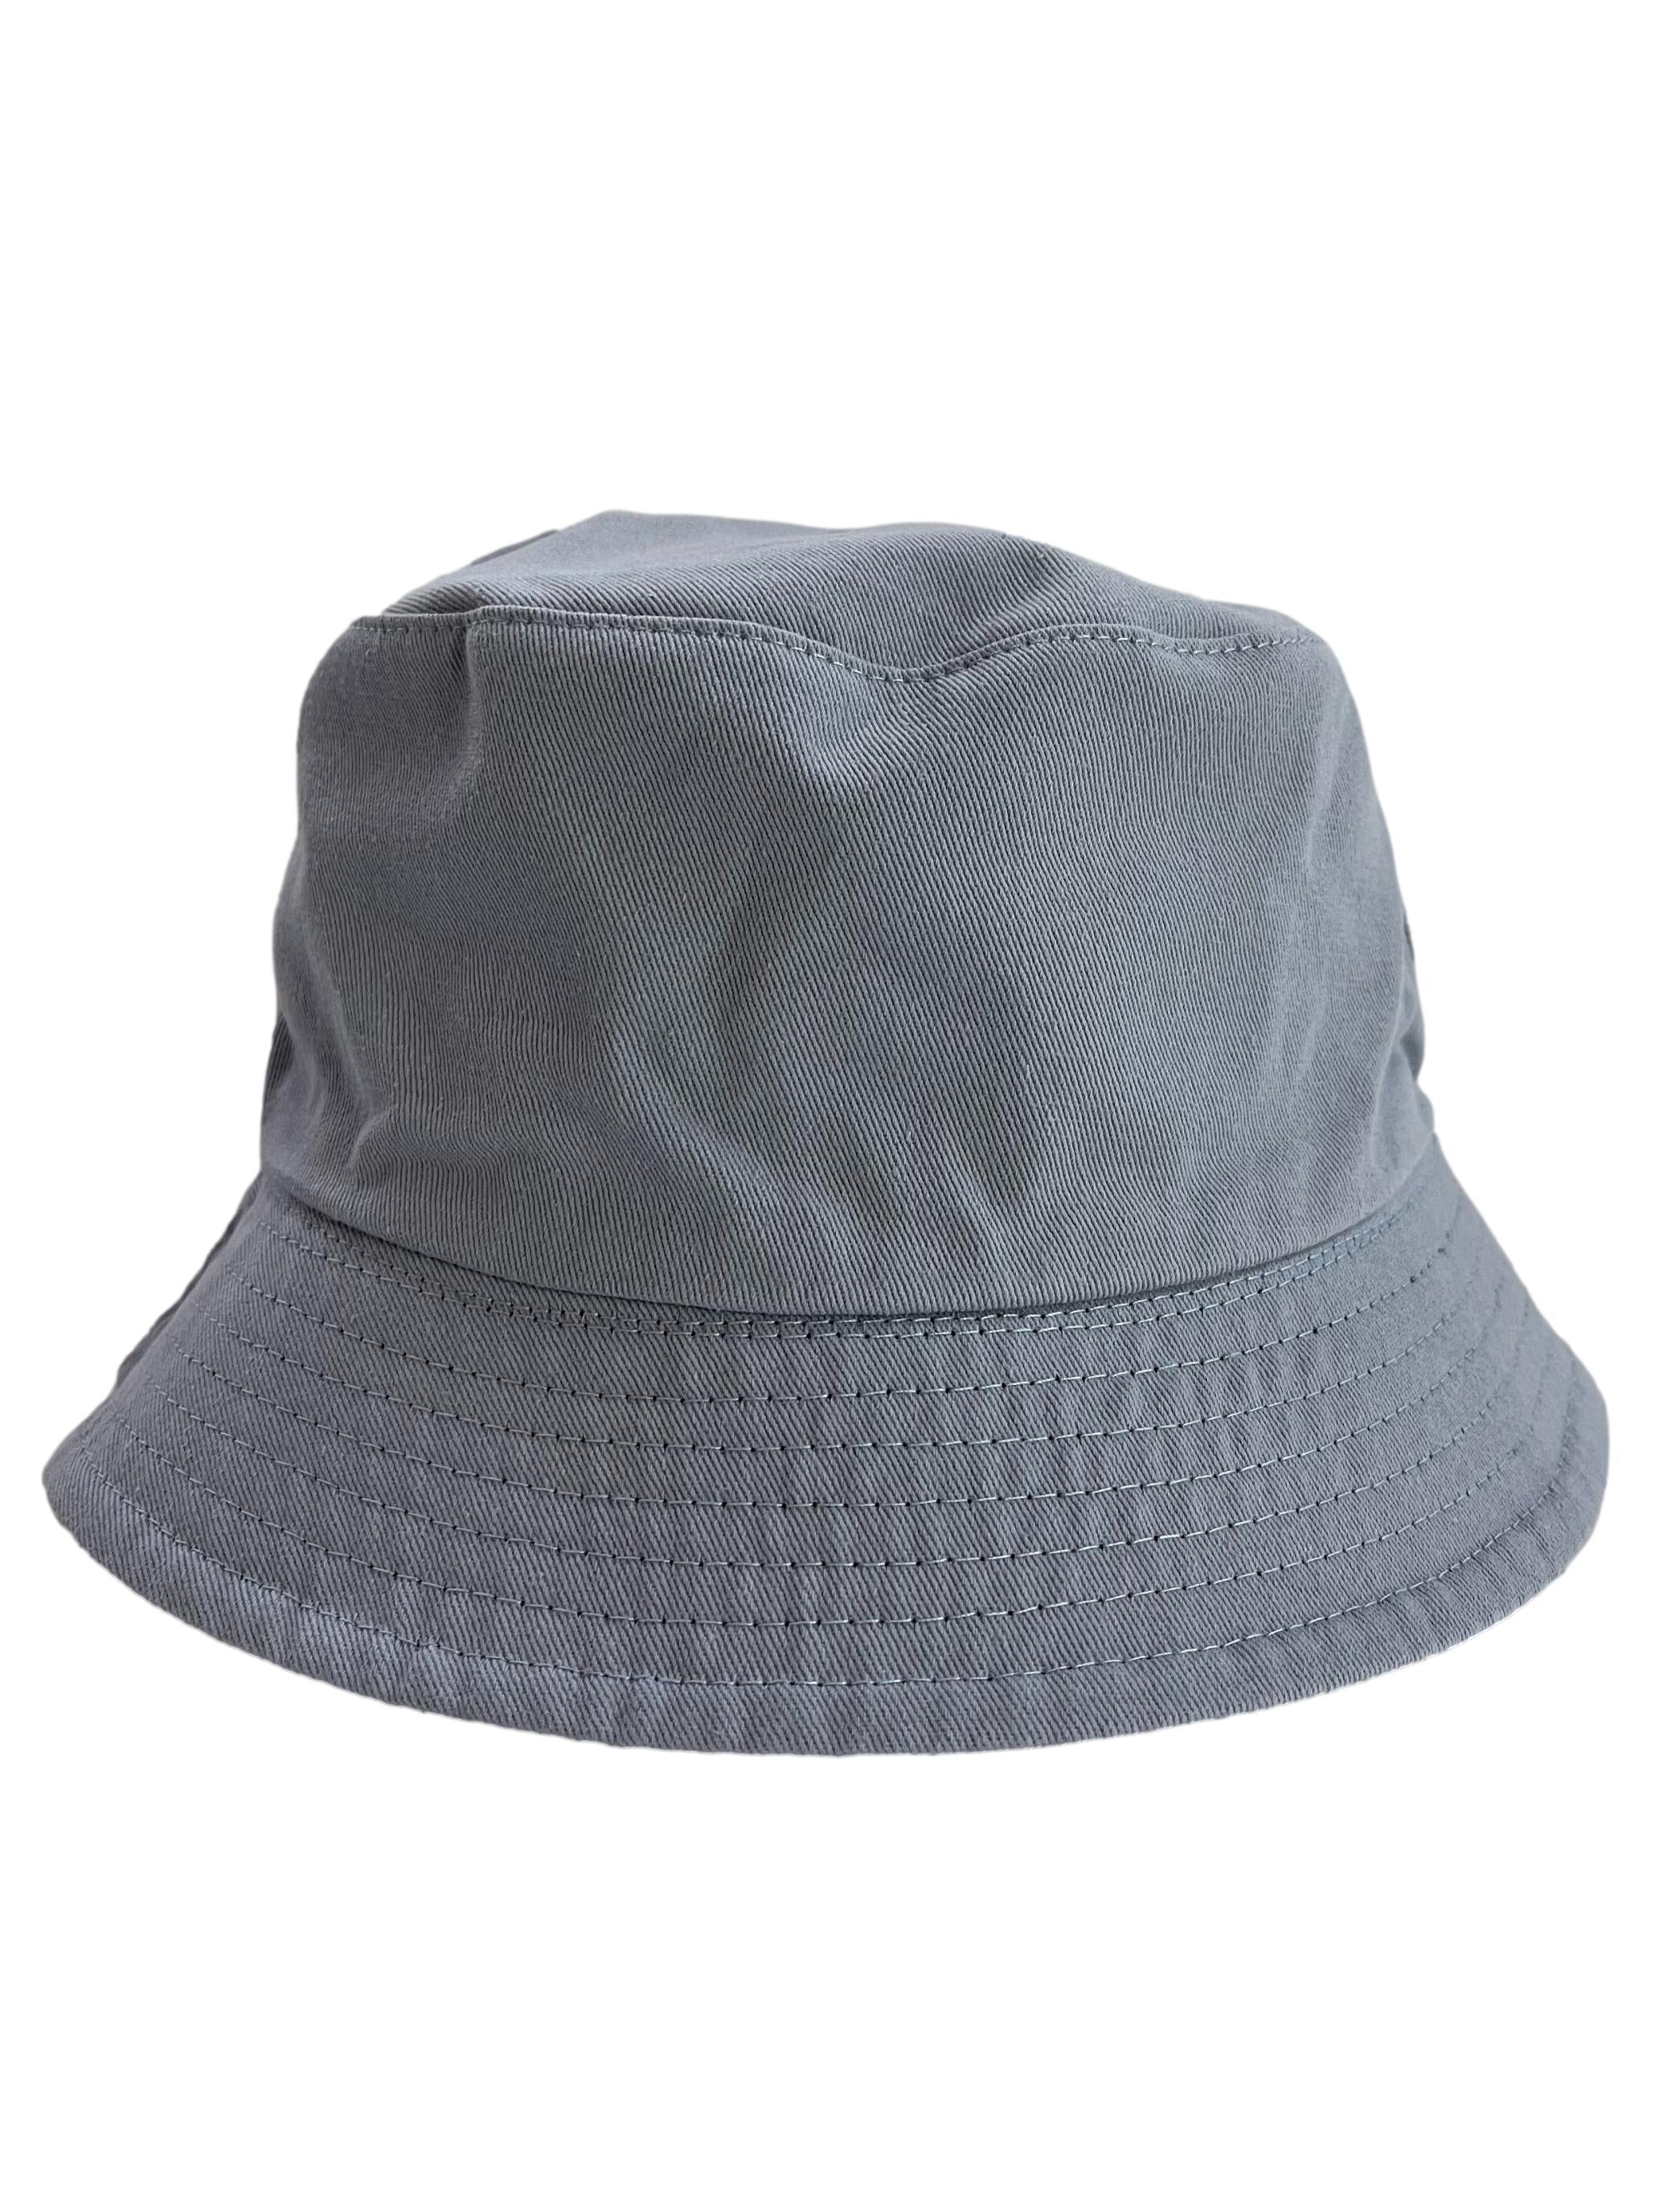 Pale Sky Blue and Black Reversible Bucket Bucket Hat